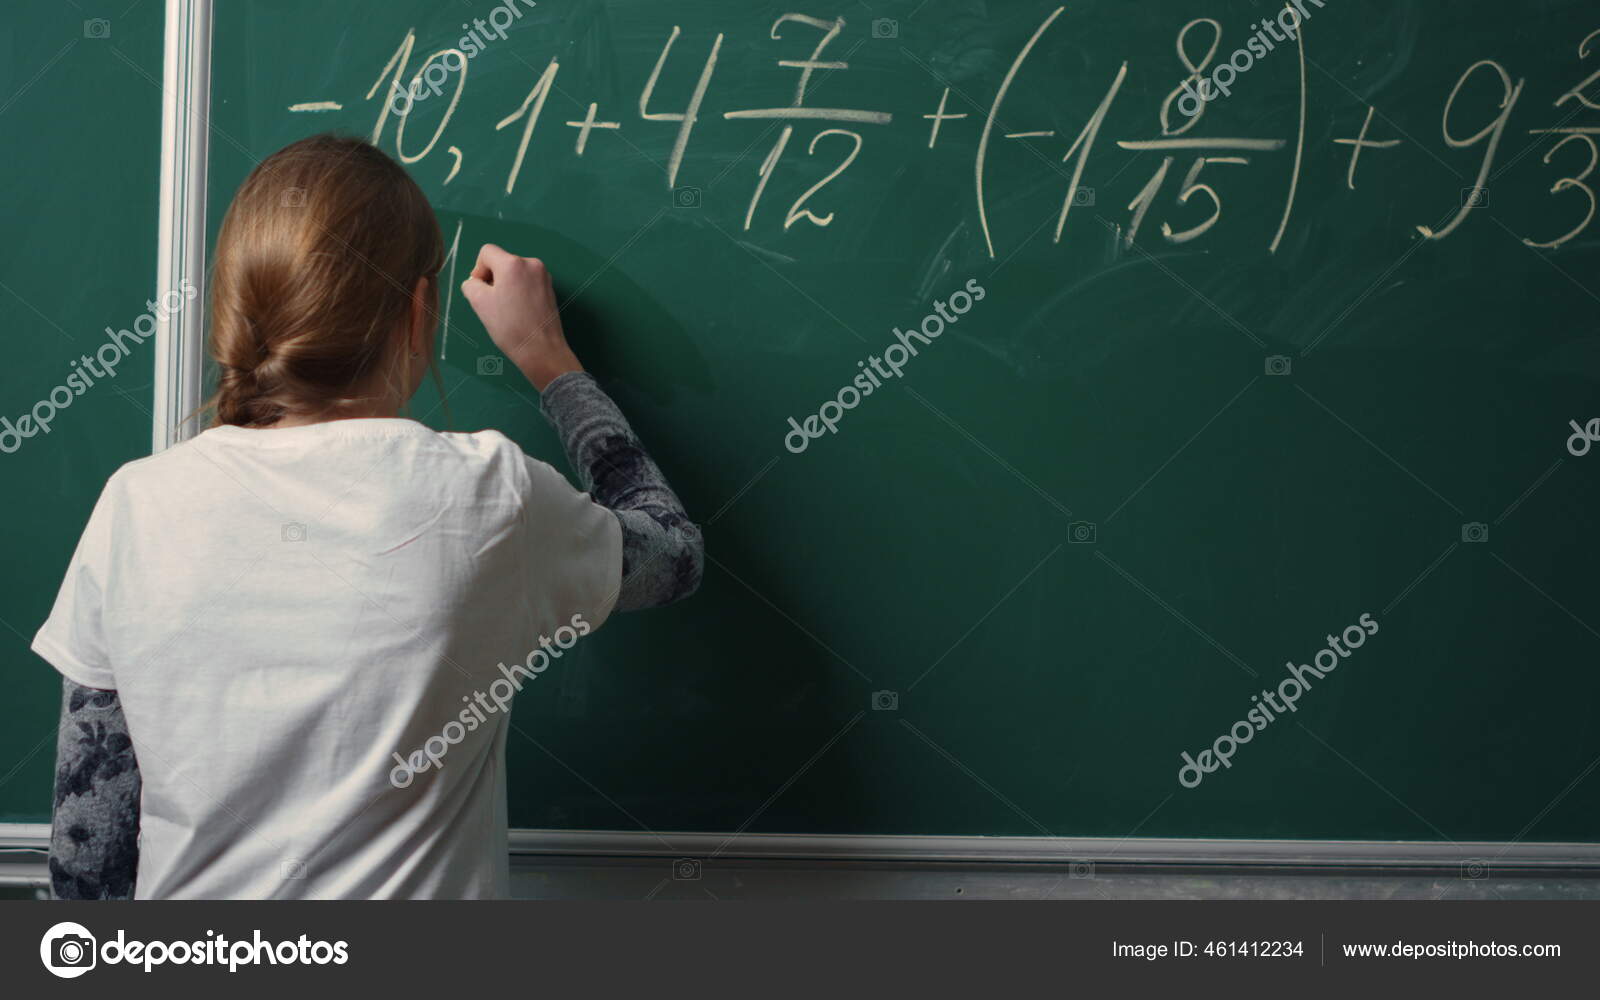 meninas-na-escola - Matemática